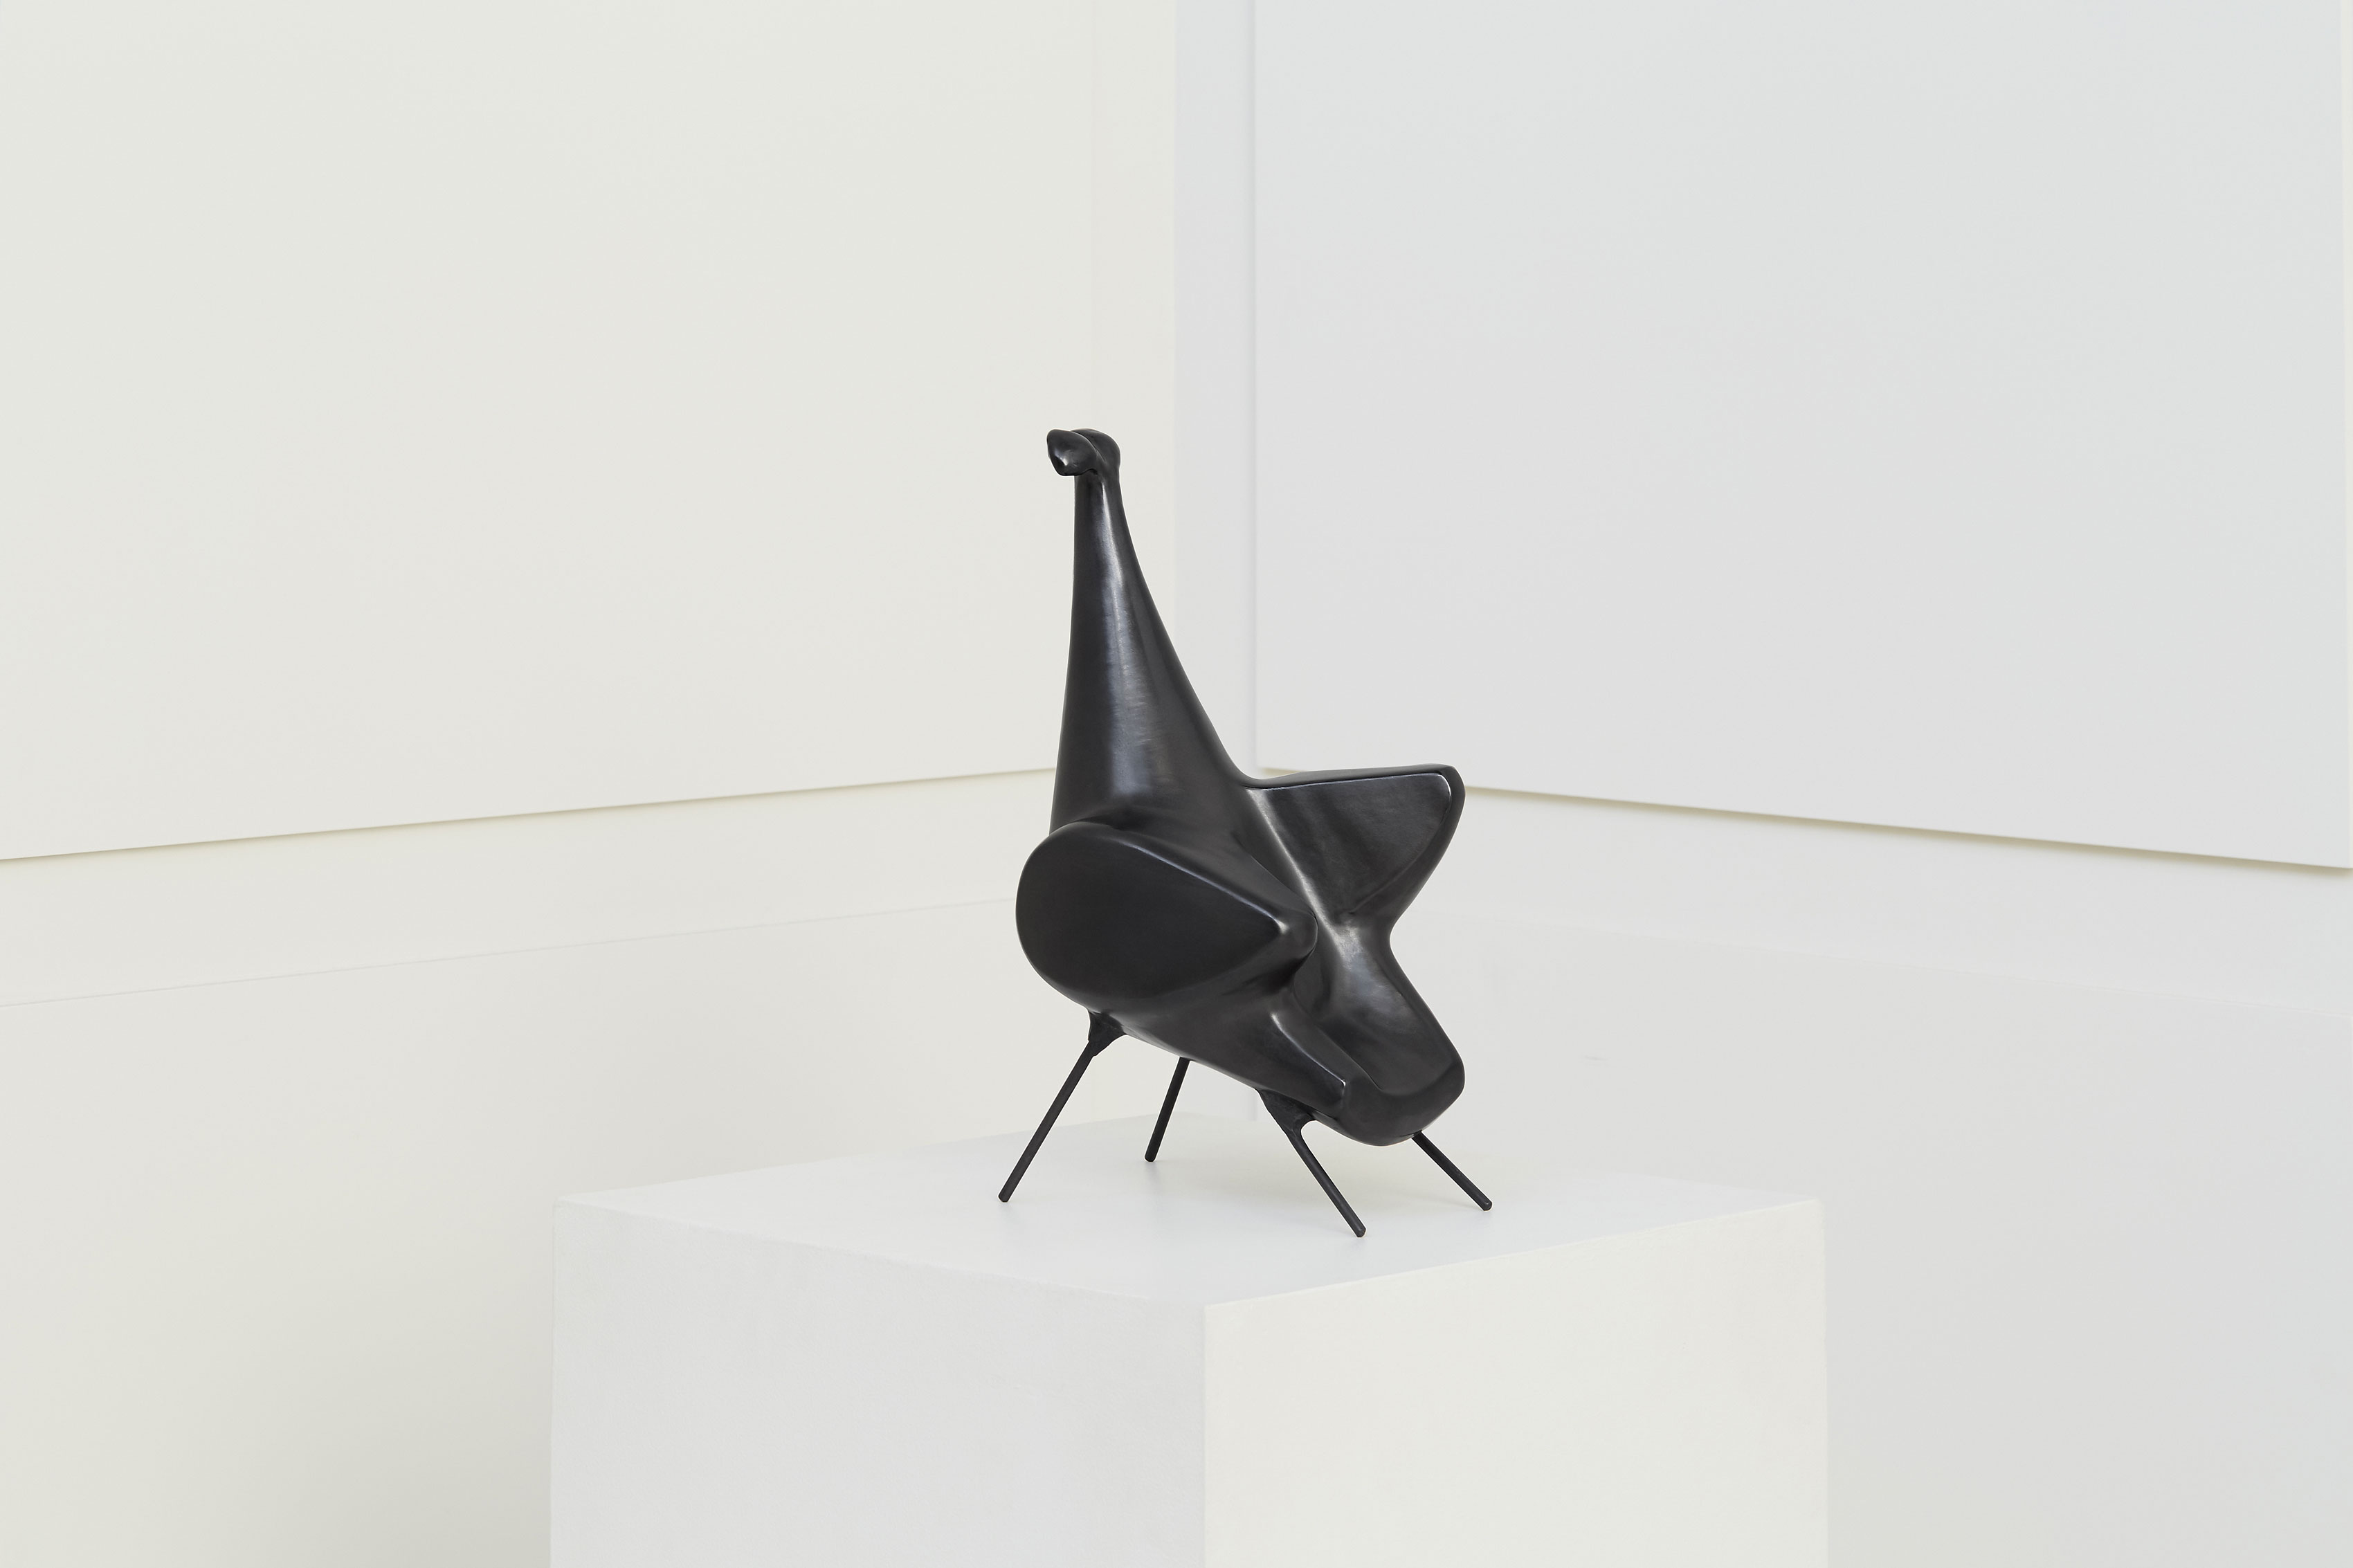 Georges Jouve, “4-legs bird” ceramic sculpture, vue 01